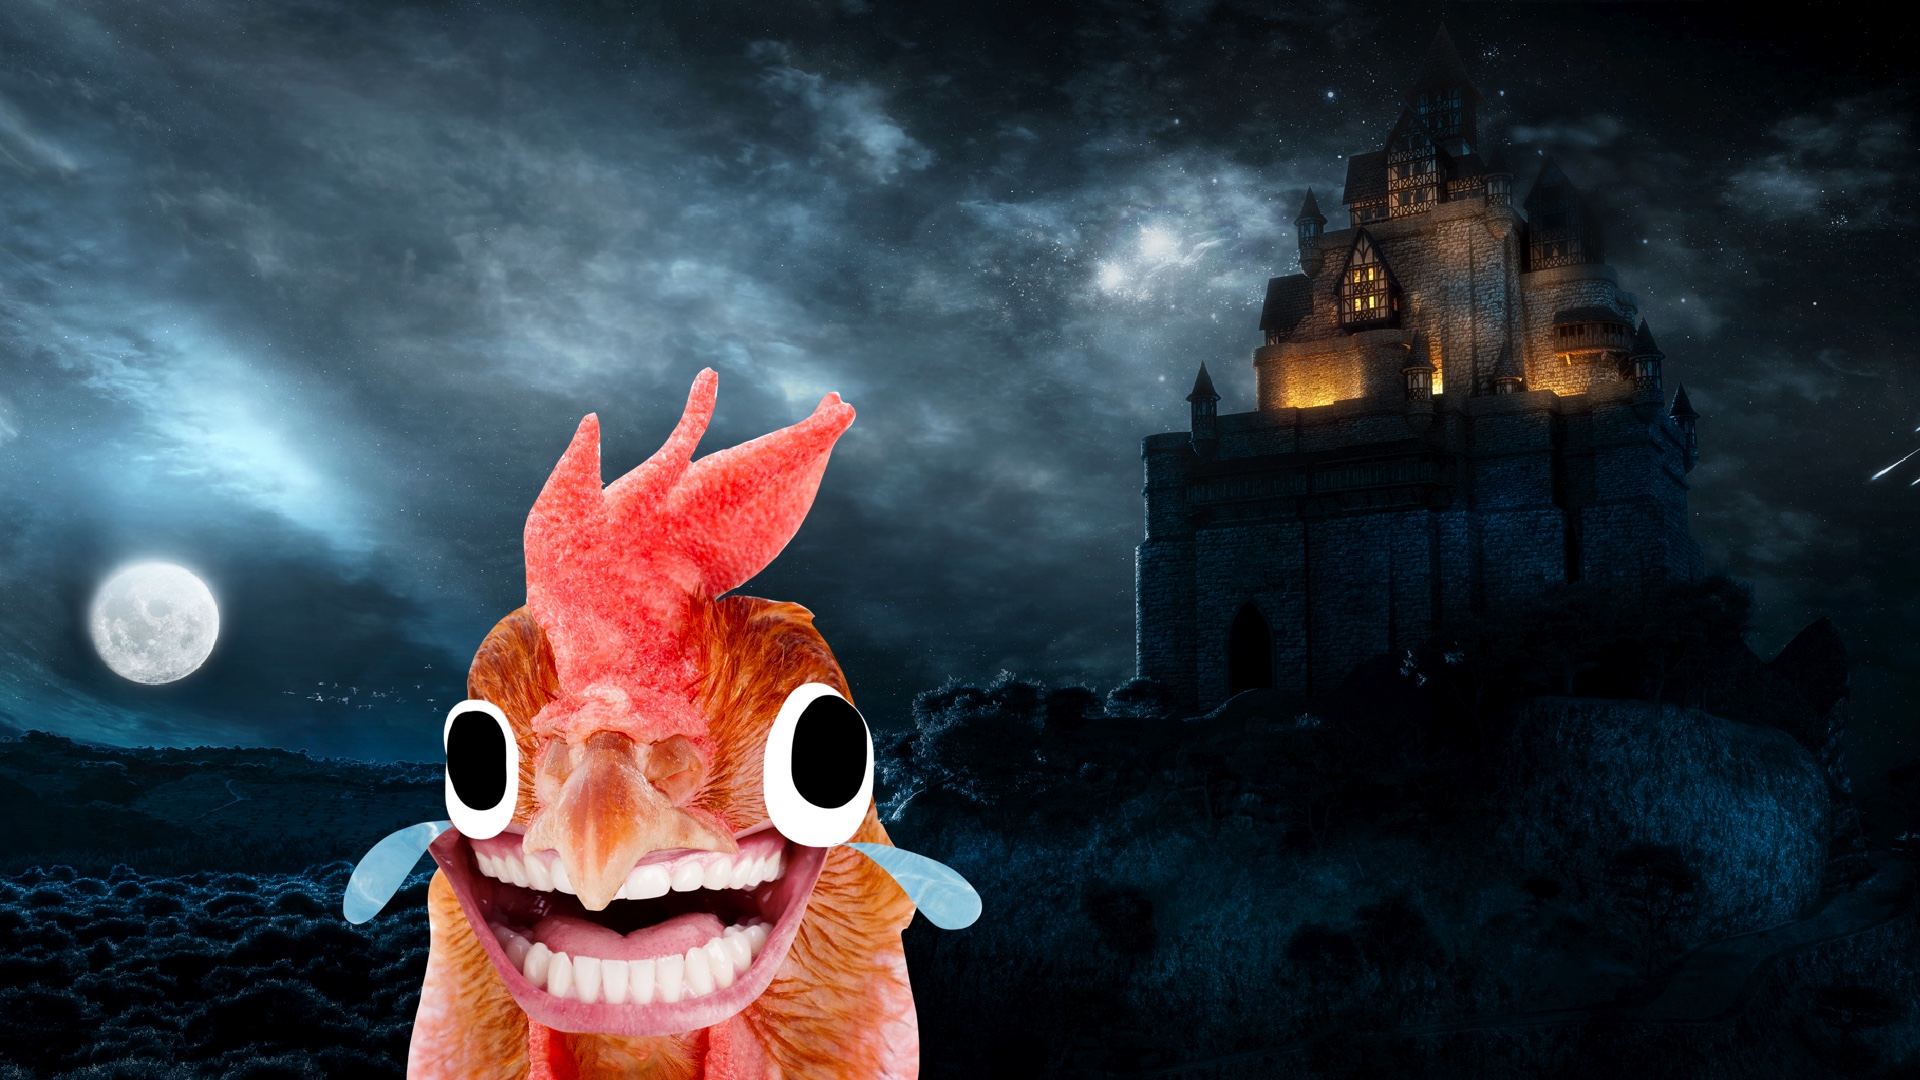 A spooky castle